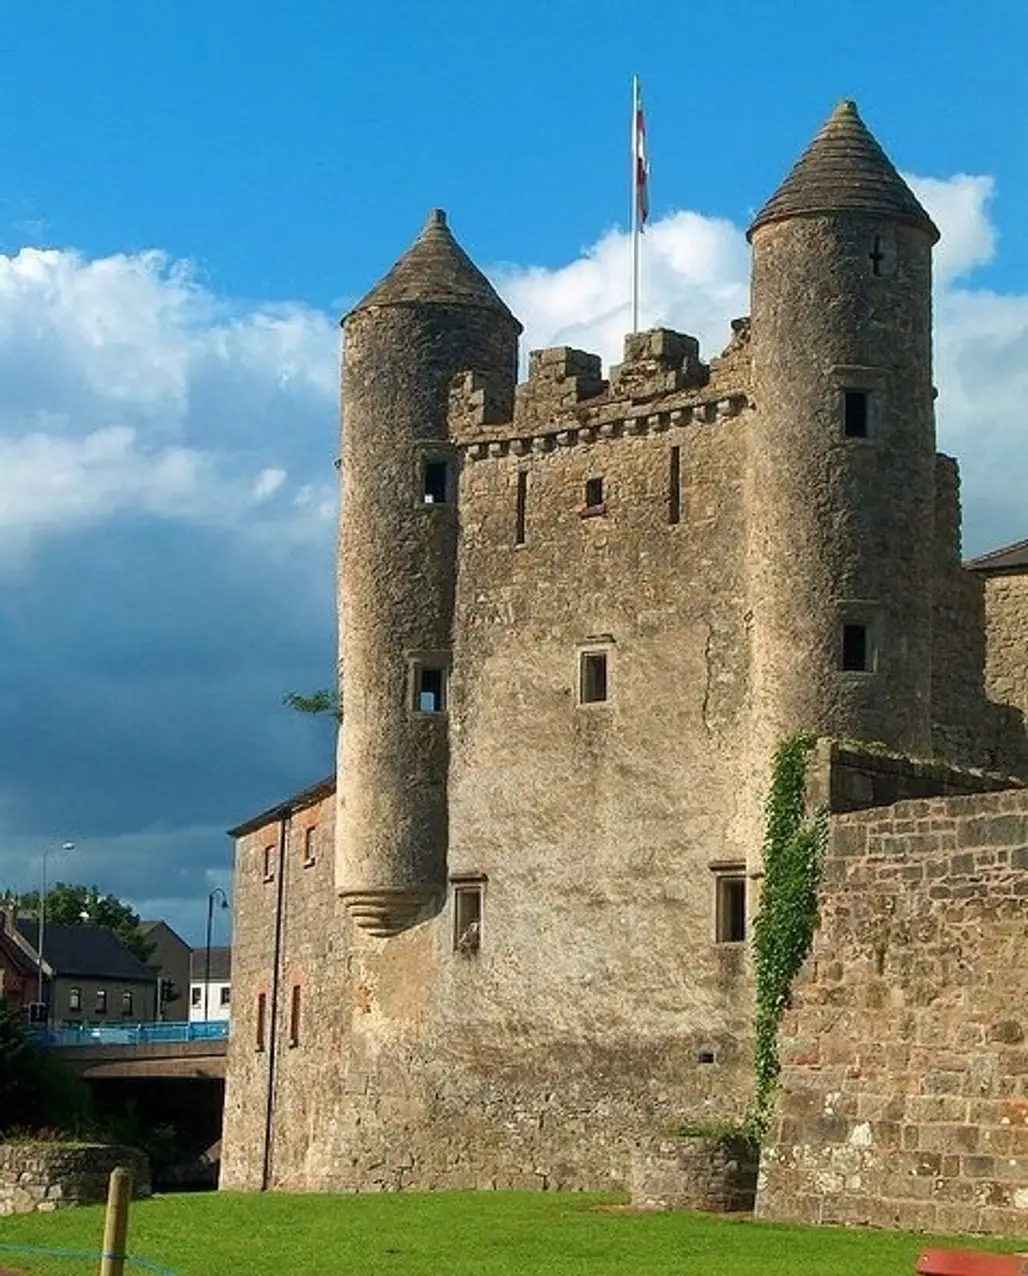 The Medieval Castle, Enniskillen